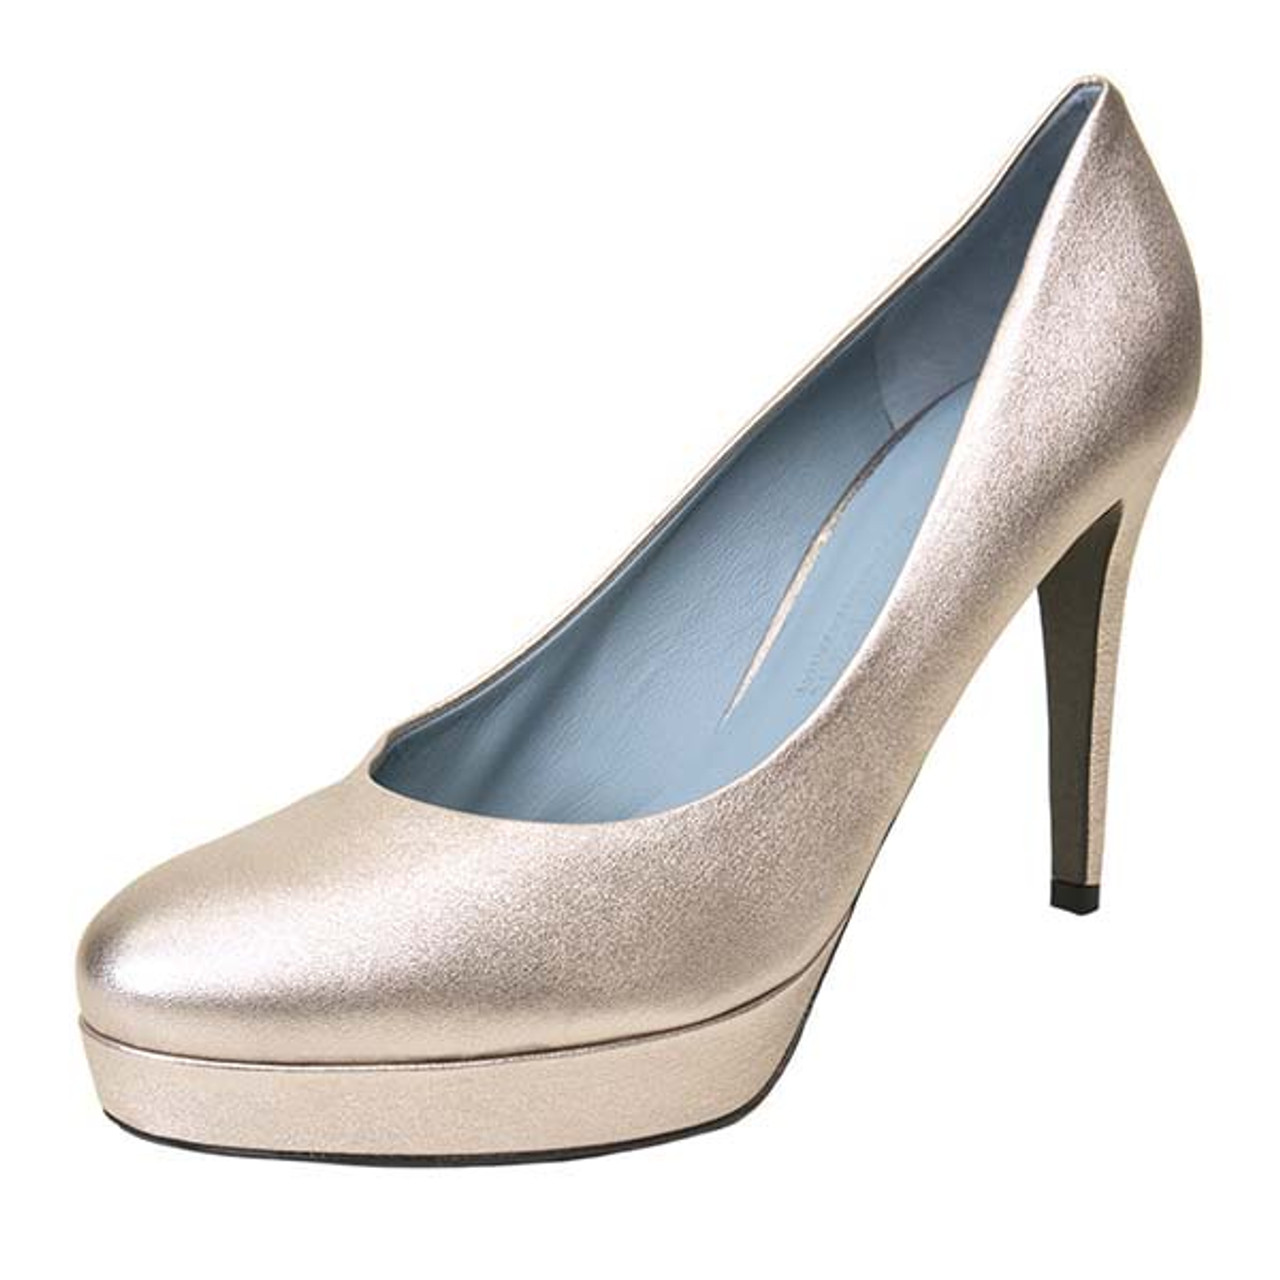 metallic pumps women's shoes